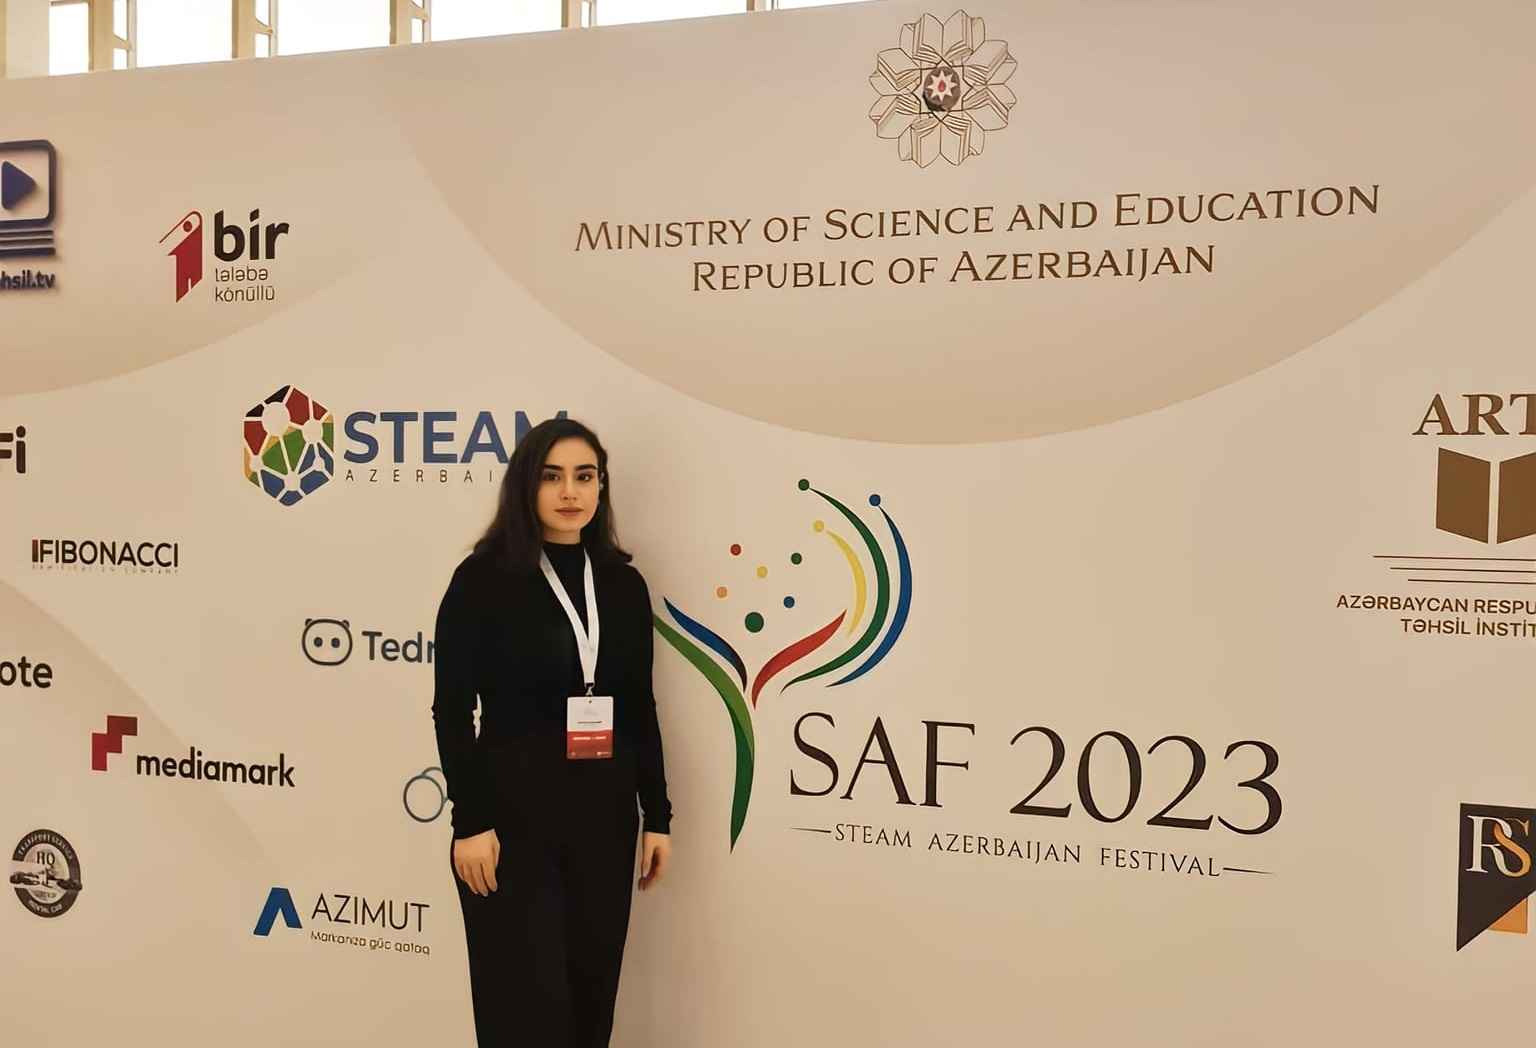 OYU teacher participated as judge/jury in SAF 2023 - International STEAM Azerbaijan Festival